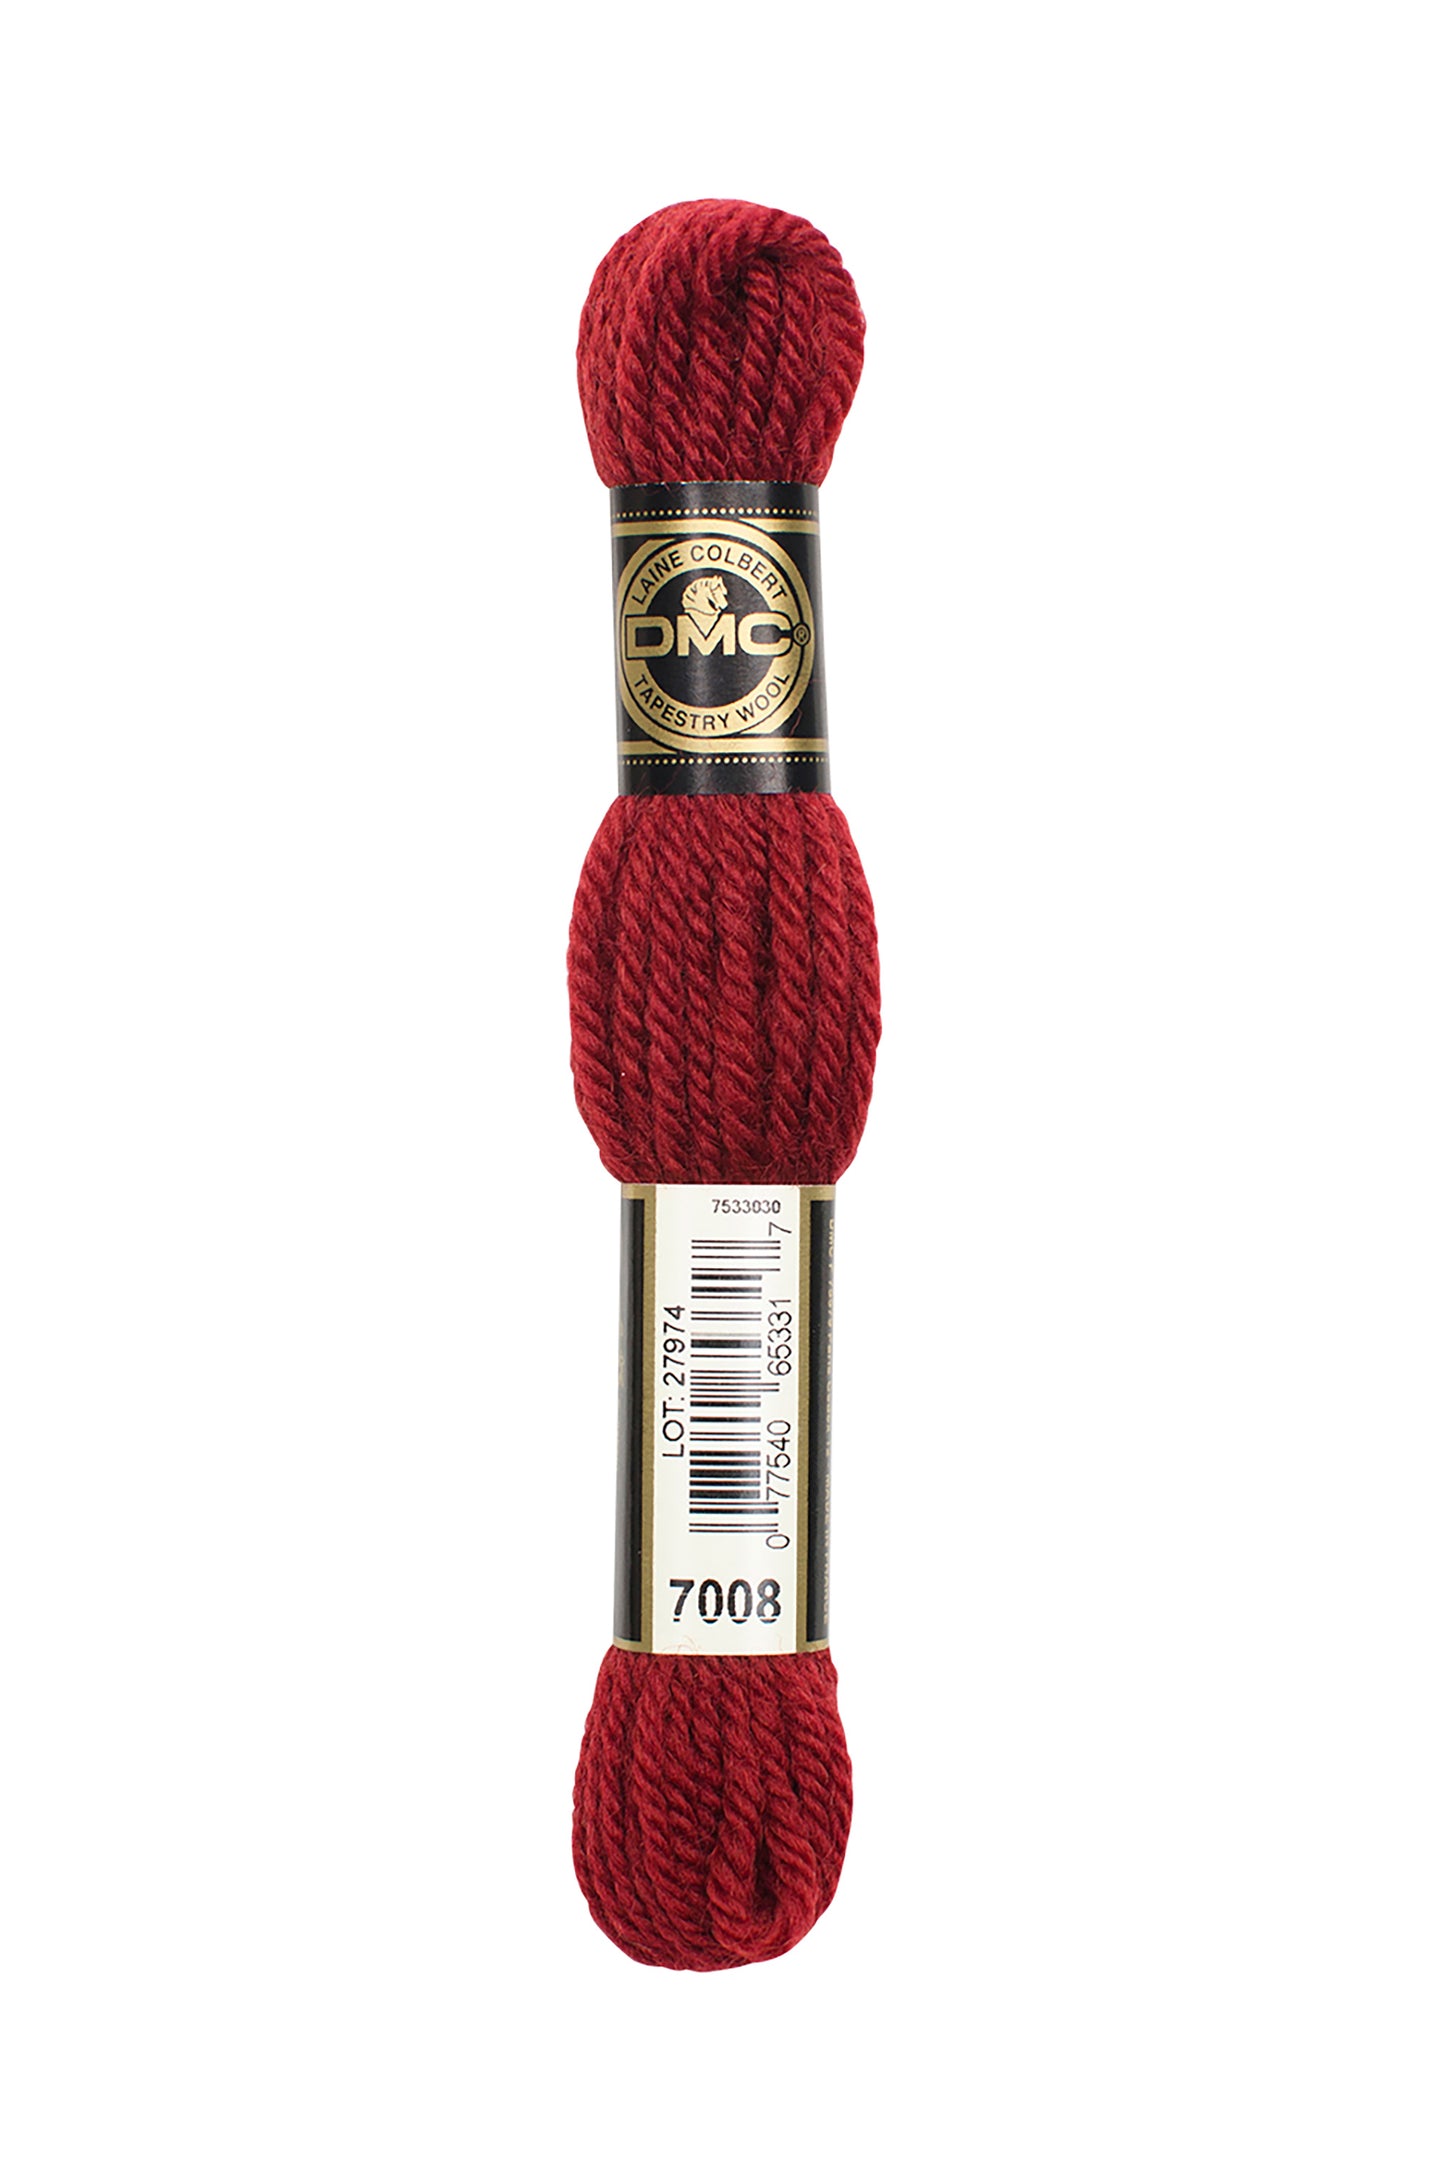 7008 – DMC Tapestry Wool